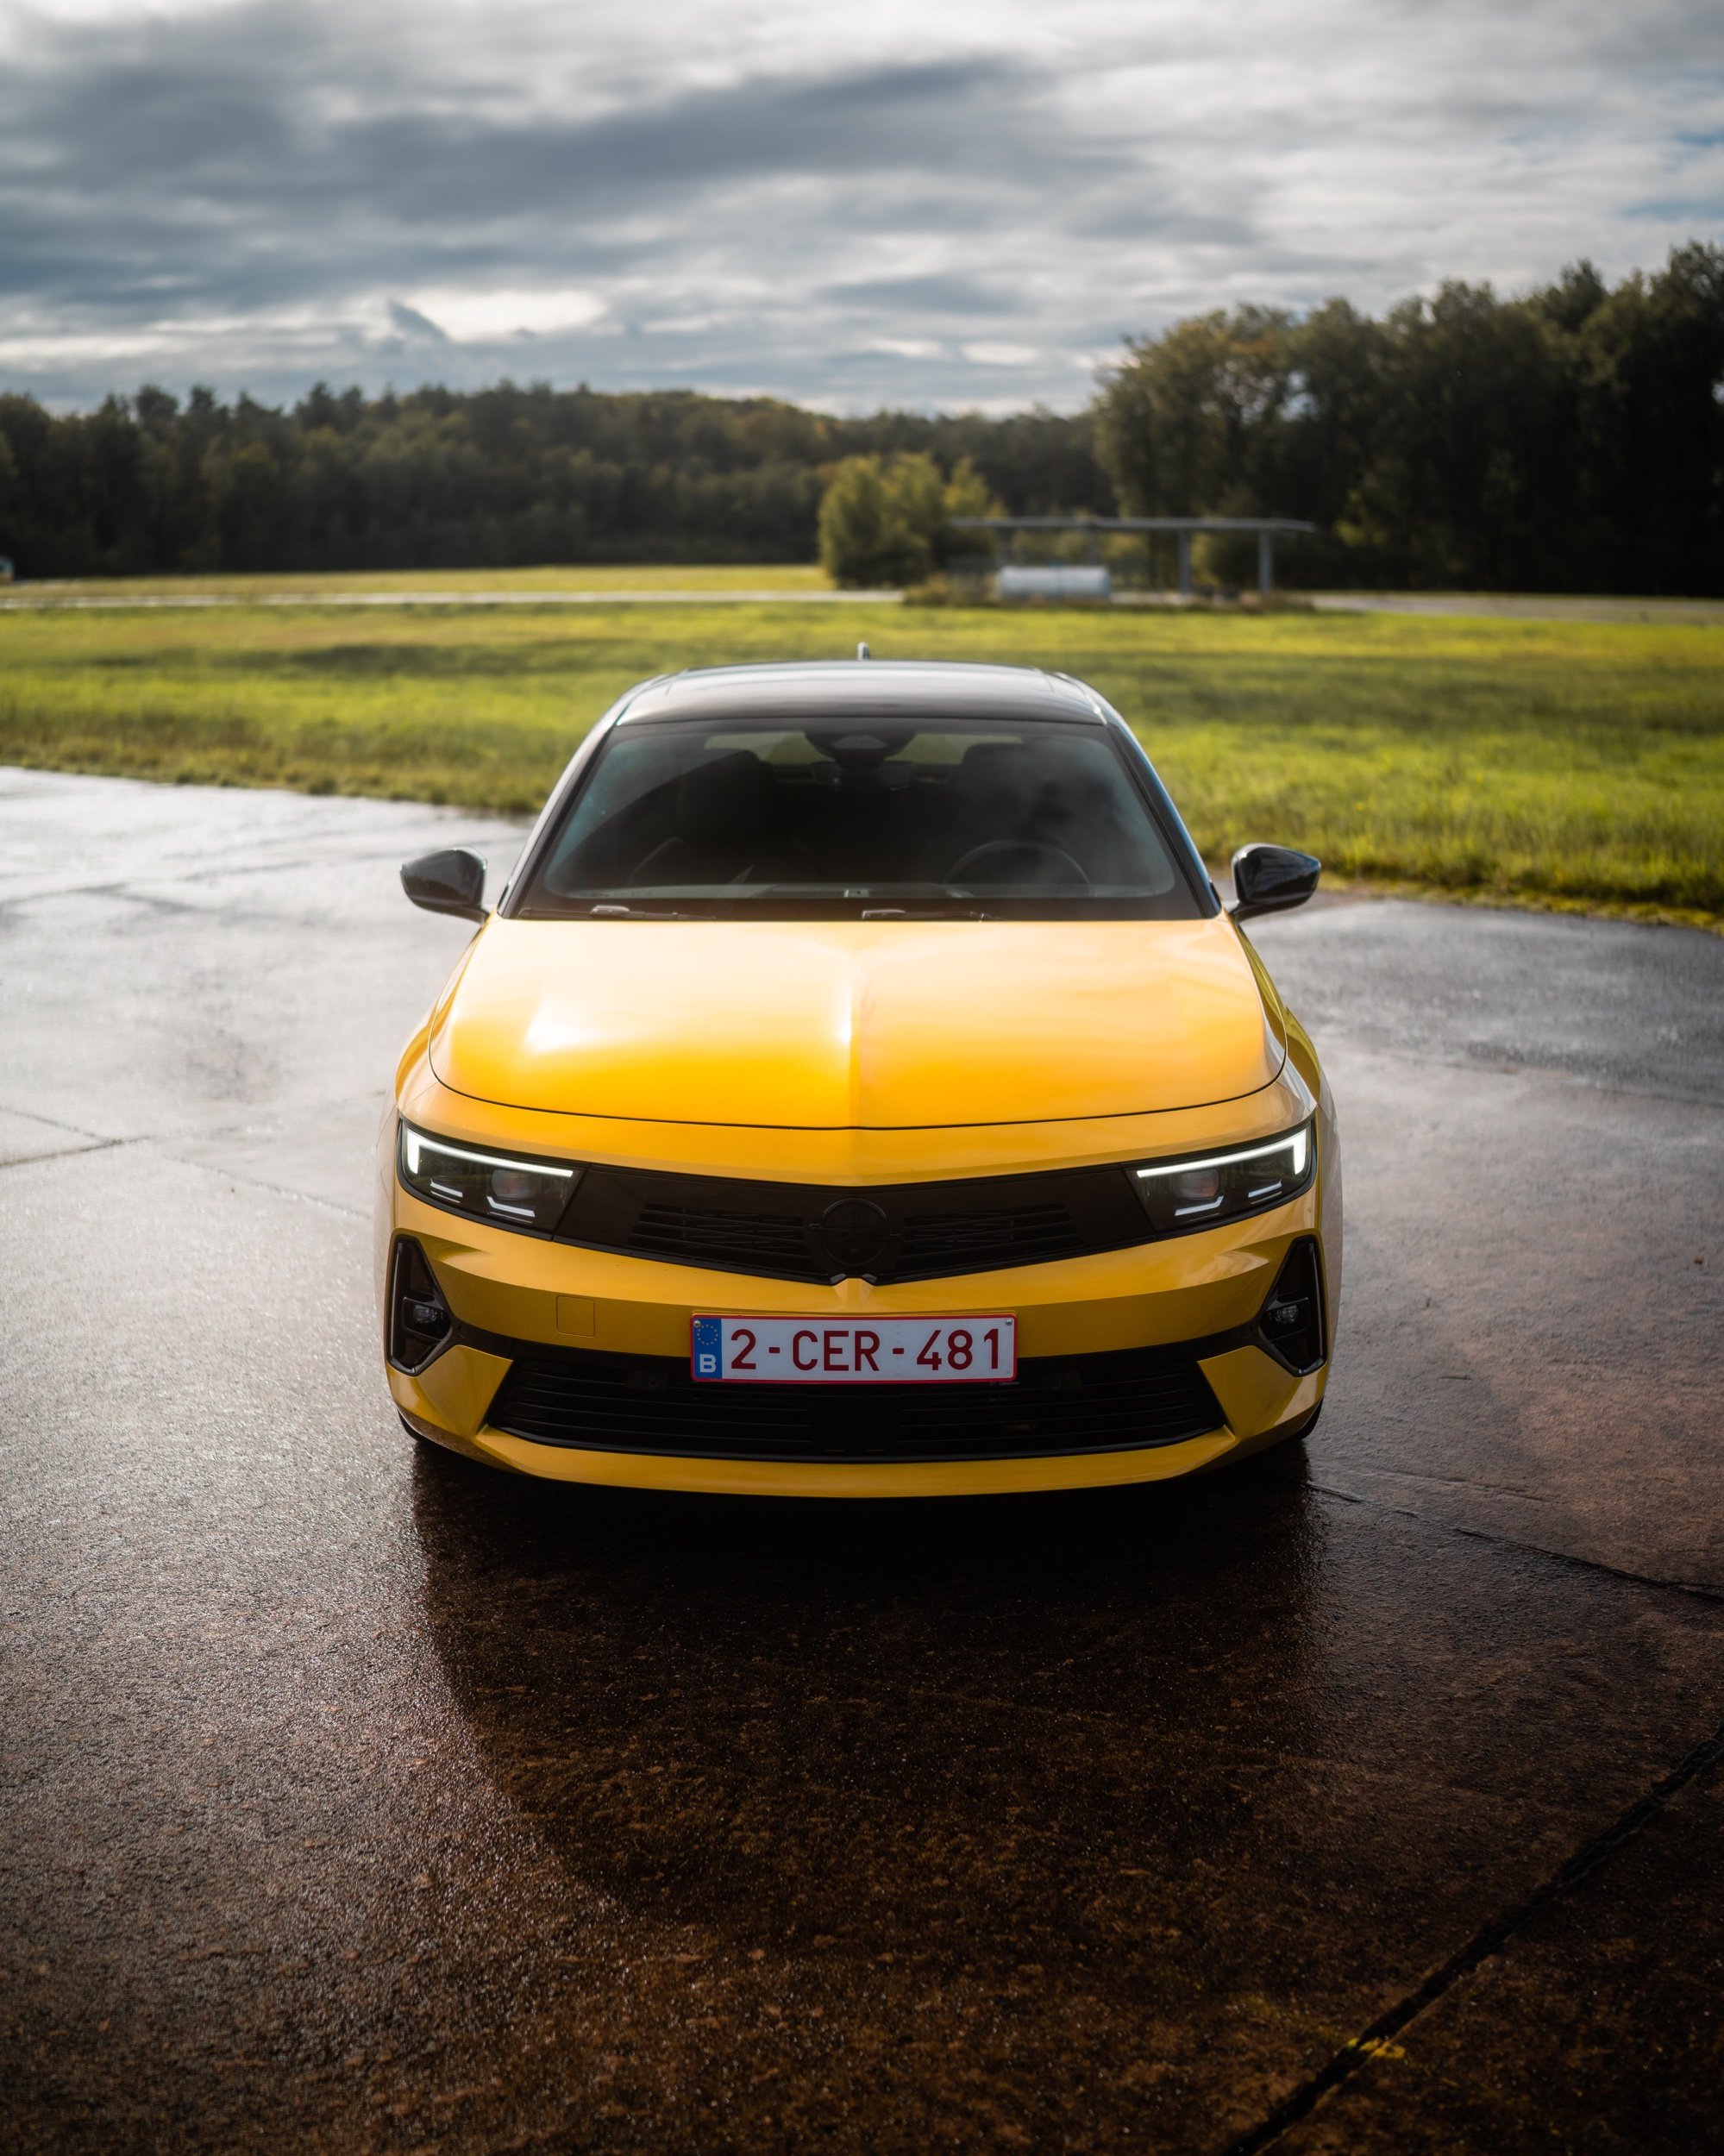 2023 Opel Astra Fünftürer Plug-in Hybrid im Test - Automagazin